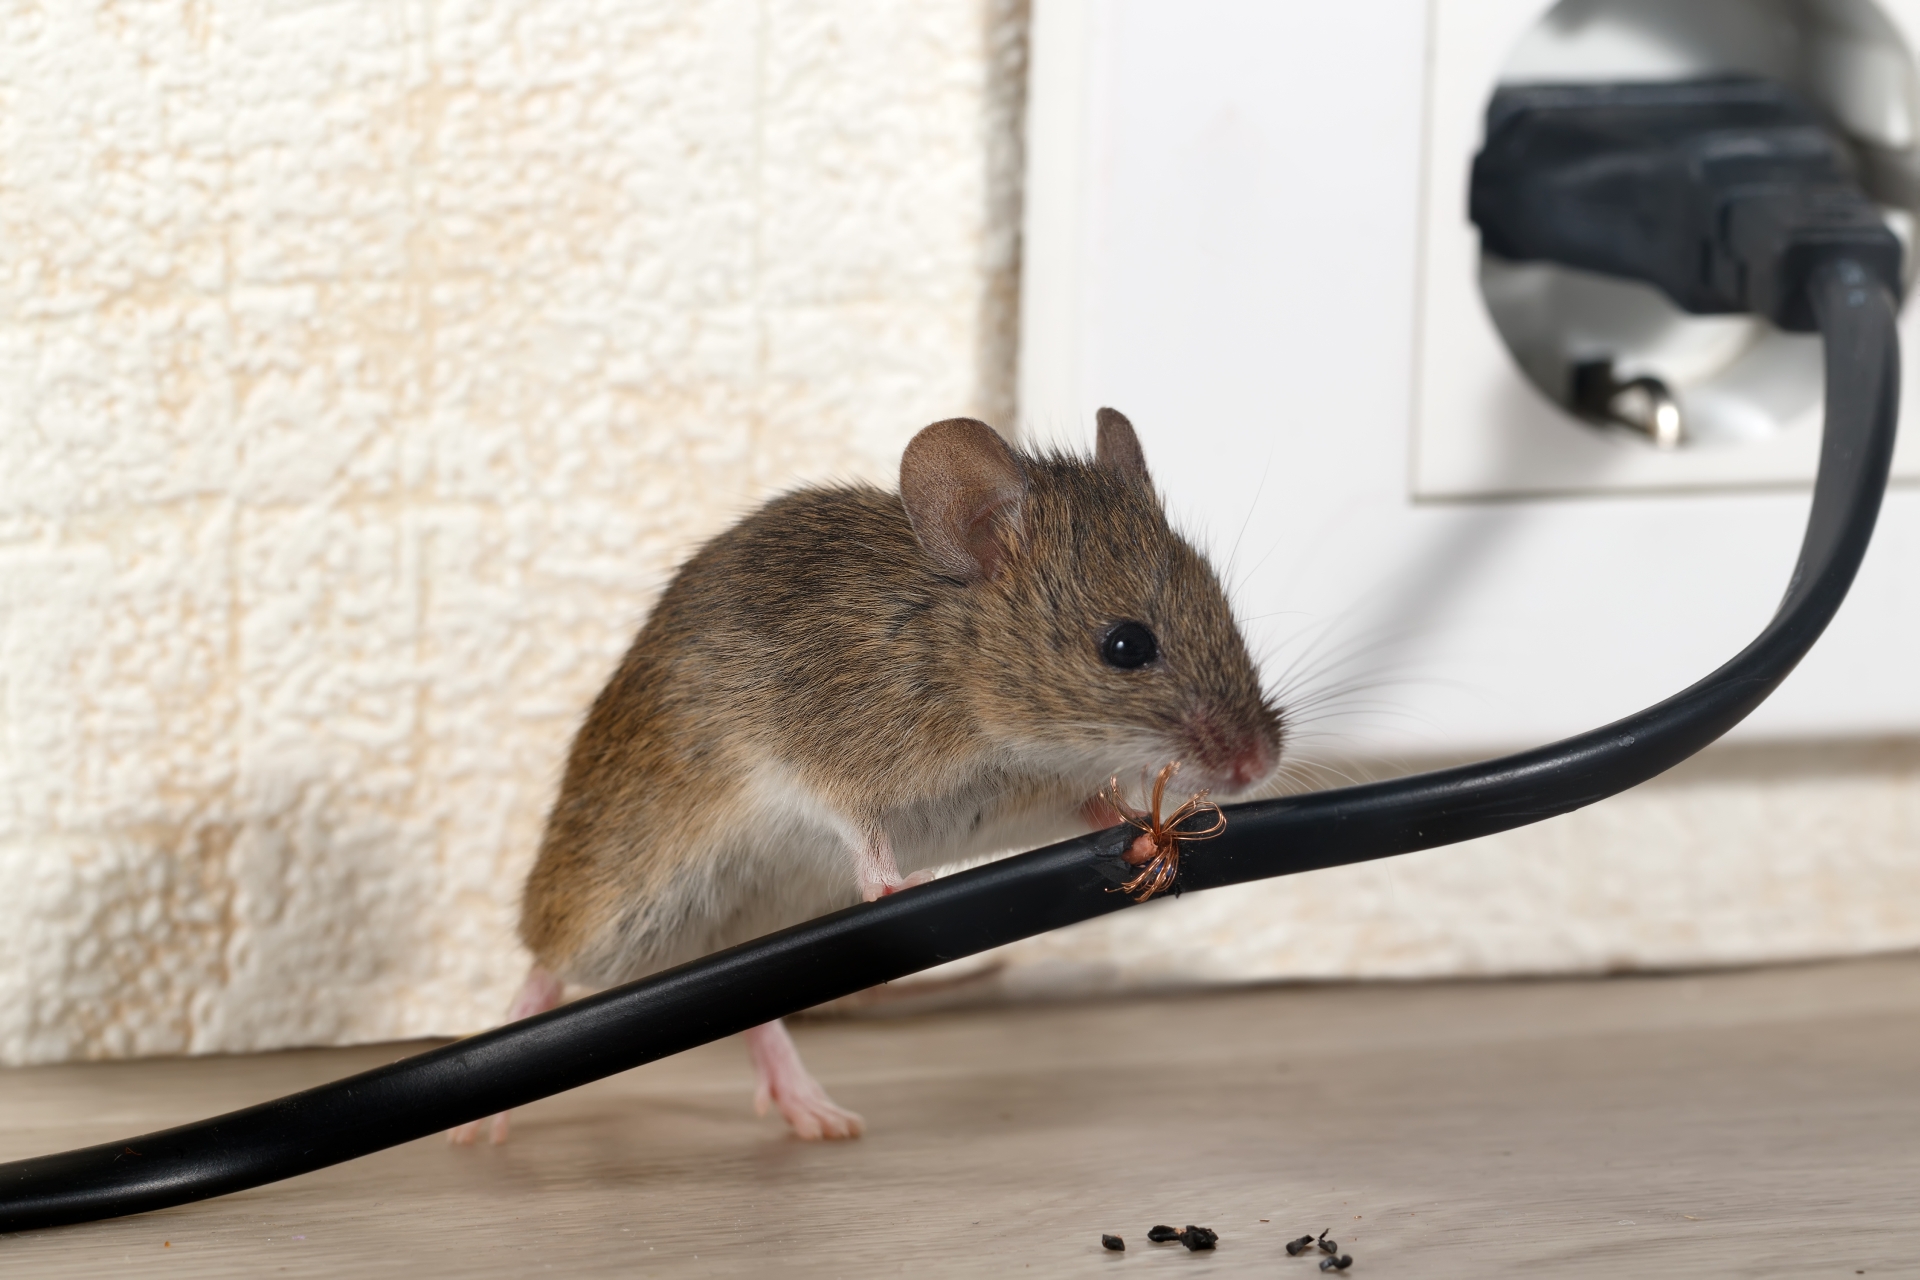 Mice Infestation, Pest Control in Farningham, Eynsford, Horton Kirby, DA4. Call Now 020 8166 9746